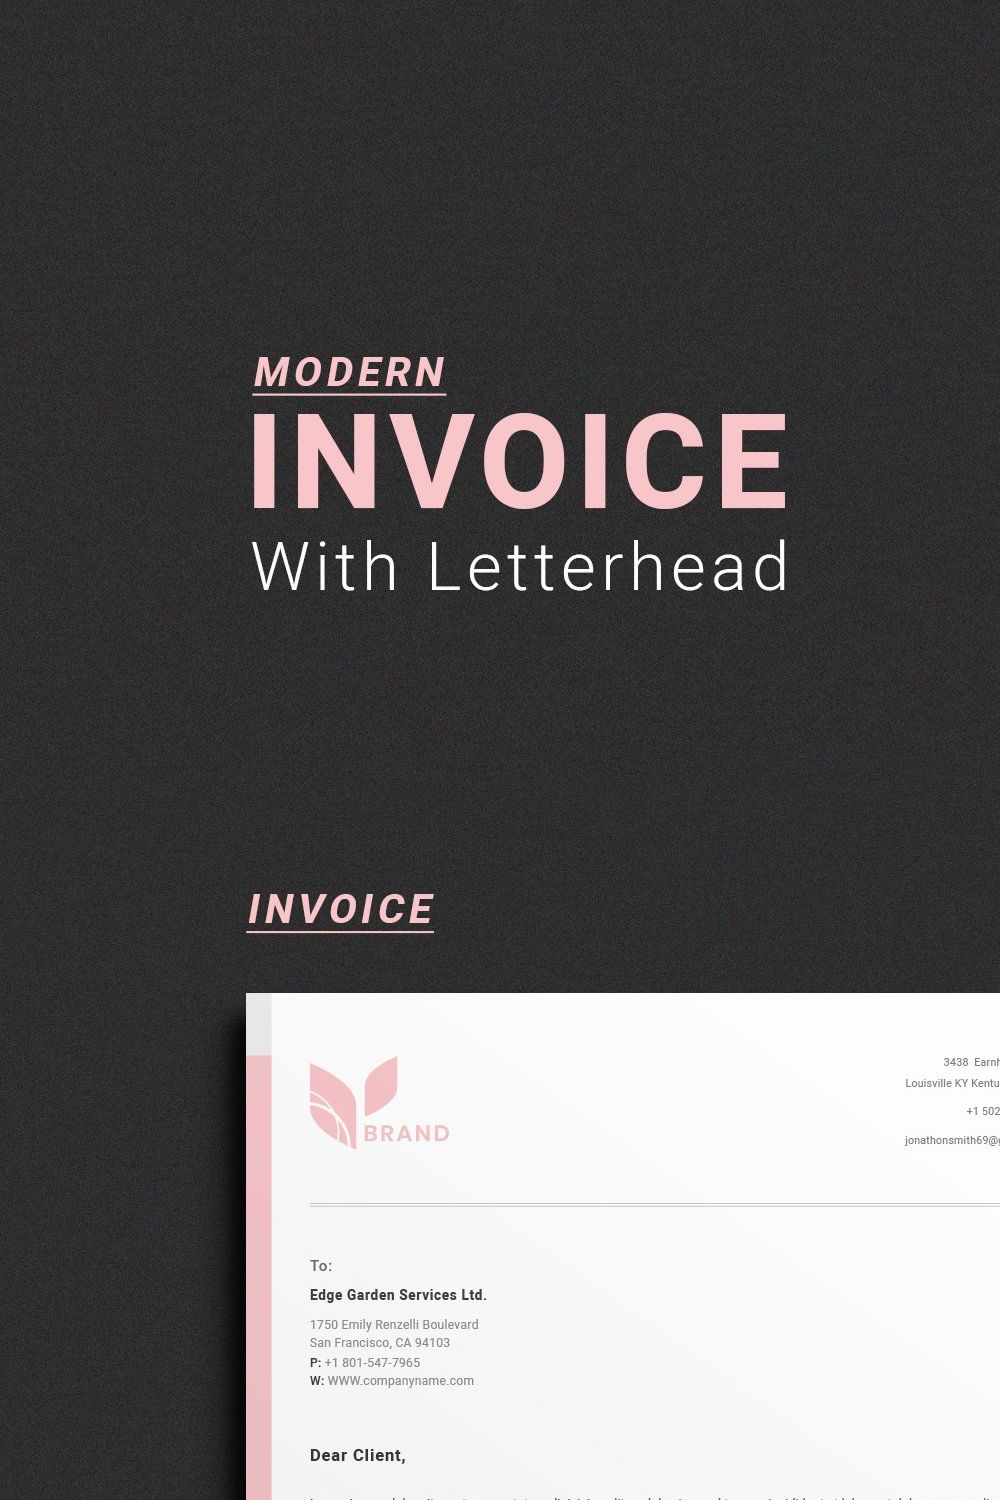 Invoice + Letterhead pinterest preview image.